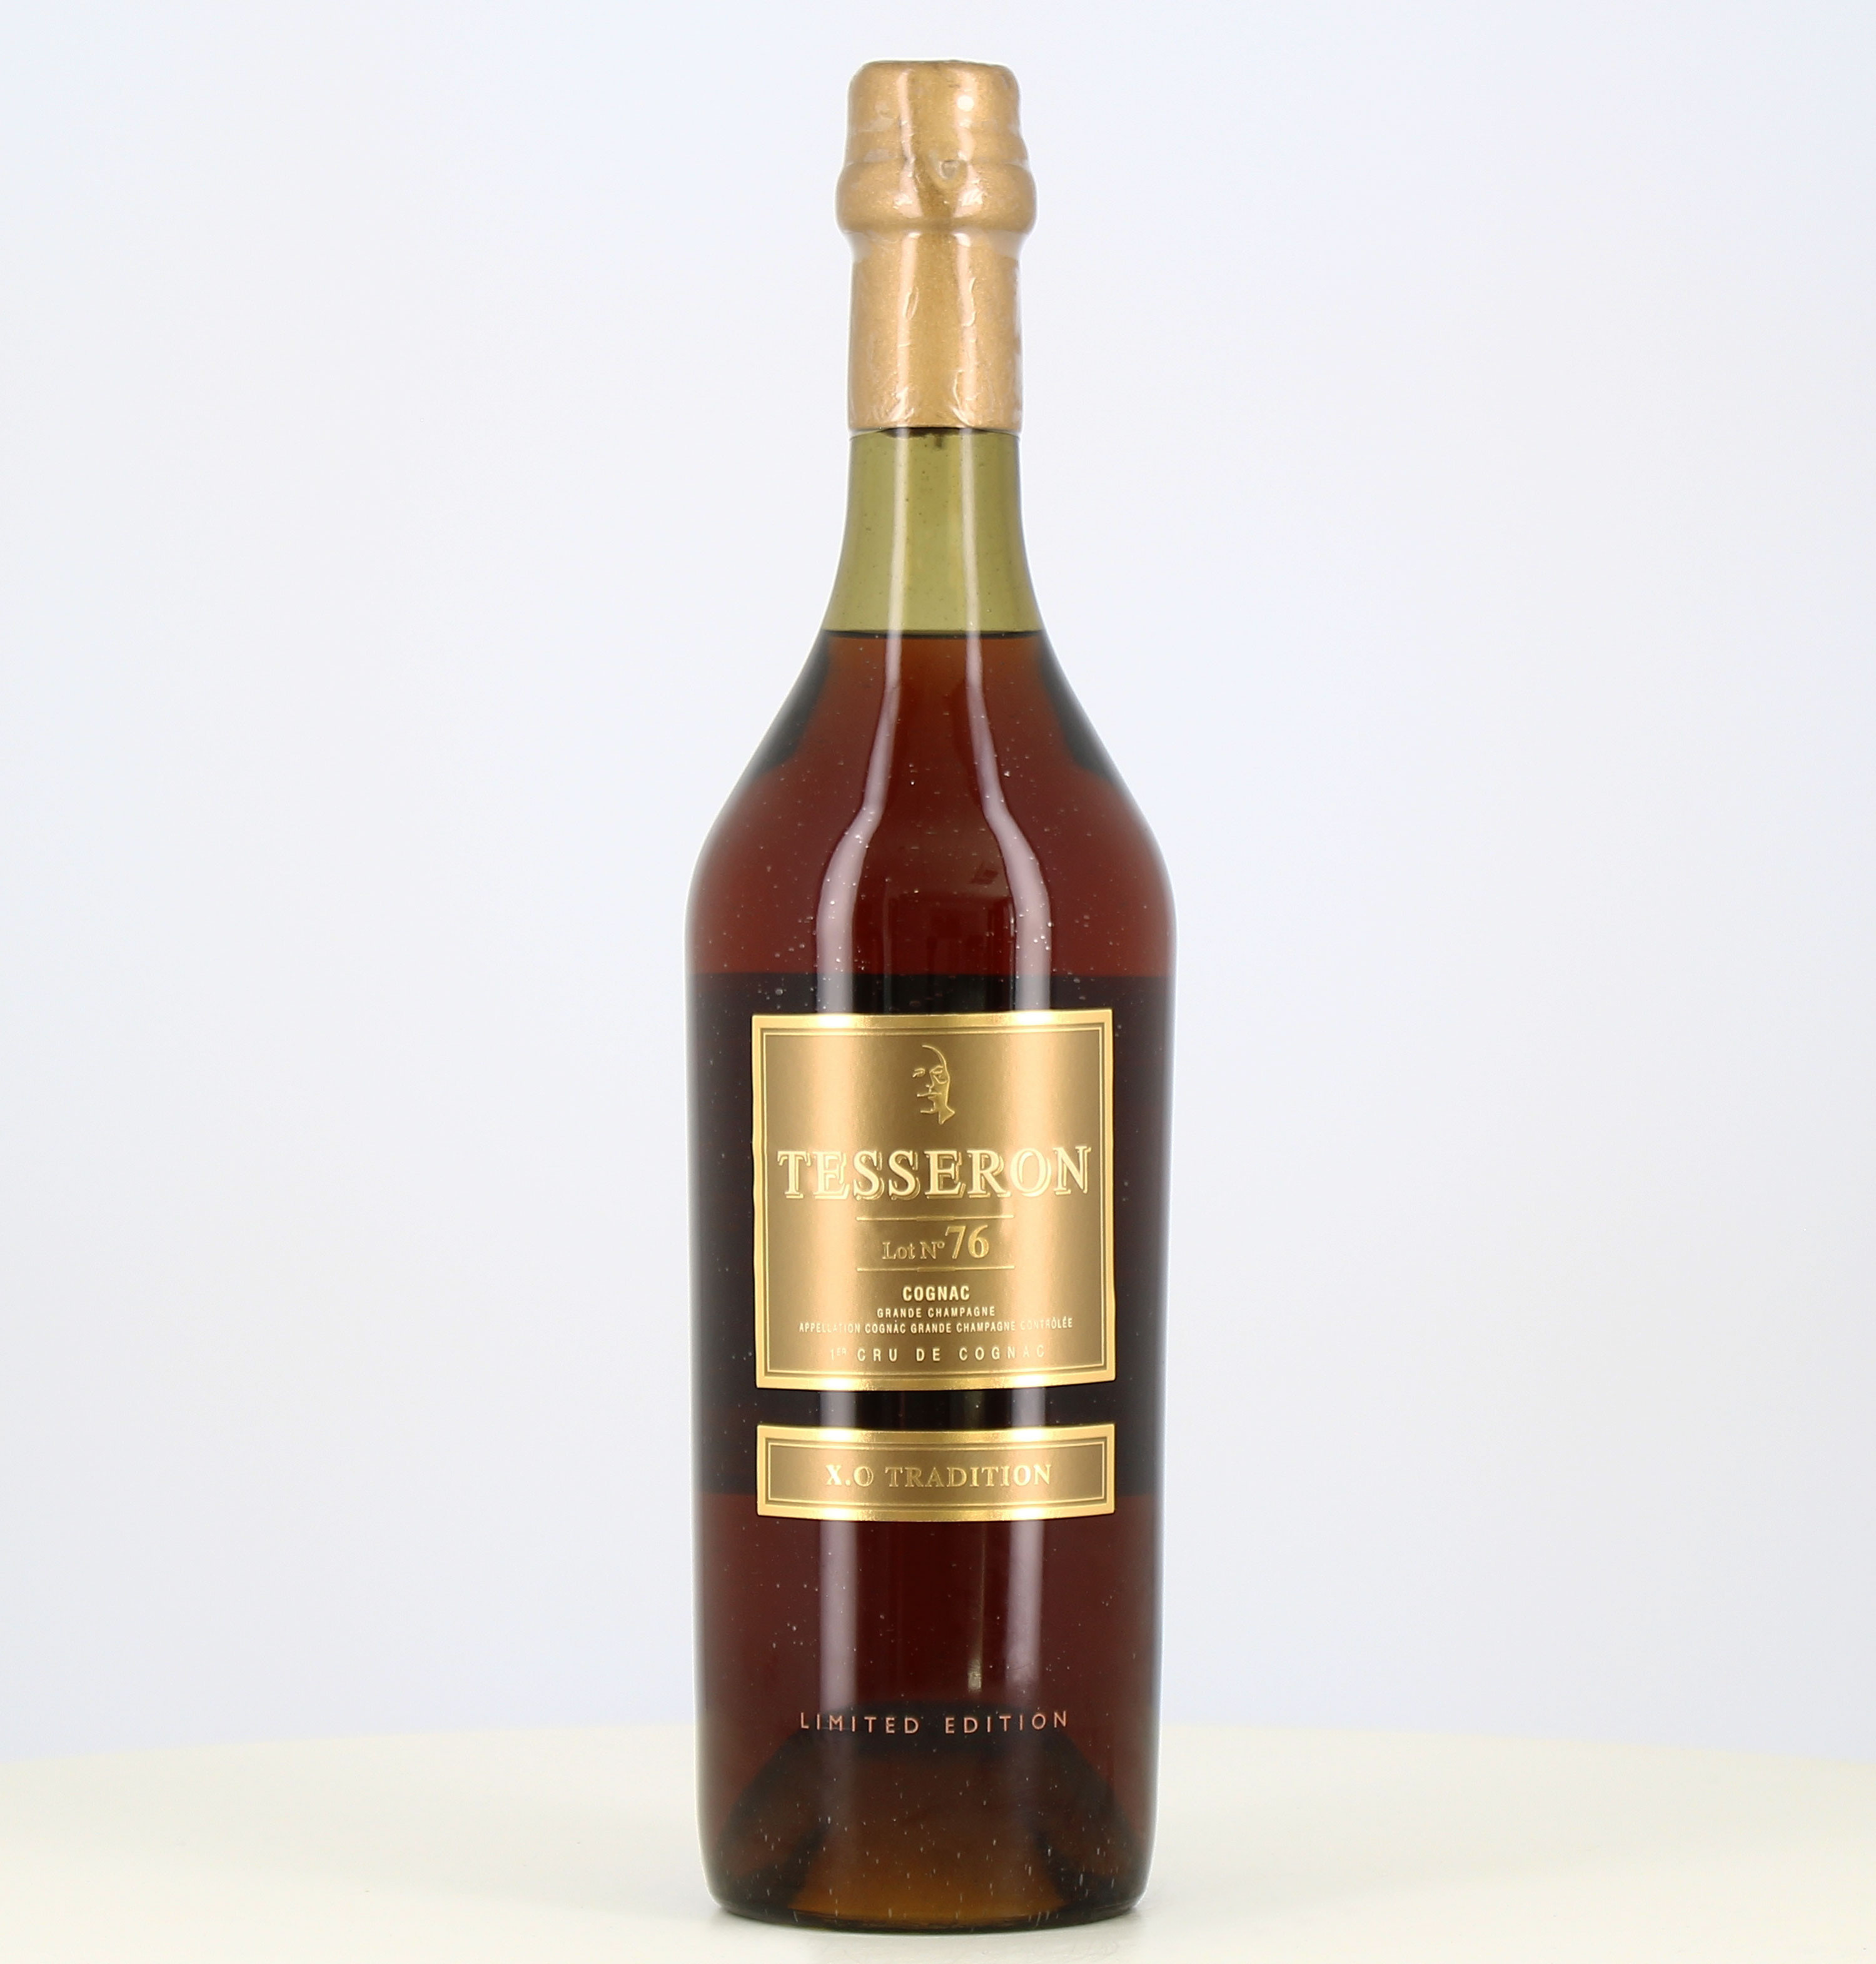 Magnum cognac Tesseron lot n76 1er Cru de cognac X.O Tradition 1,75L 